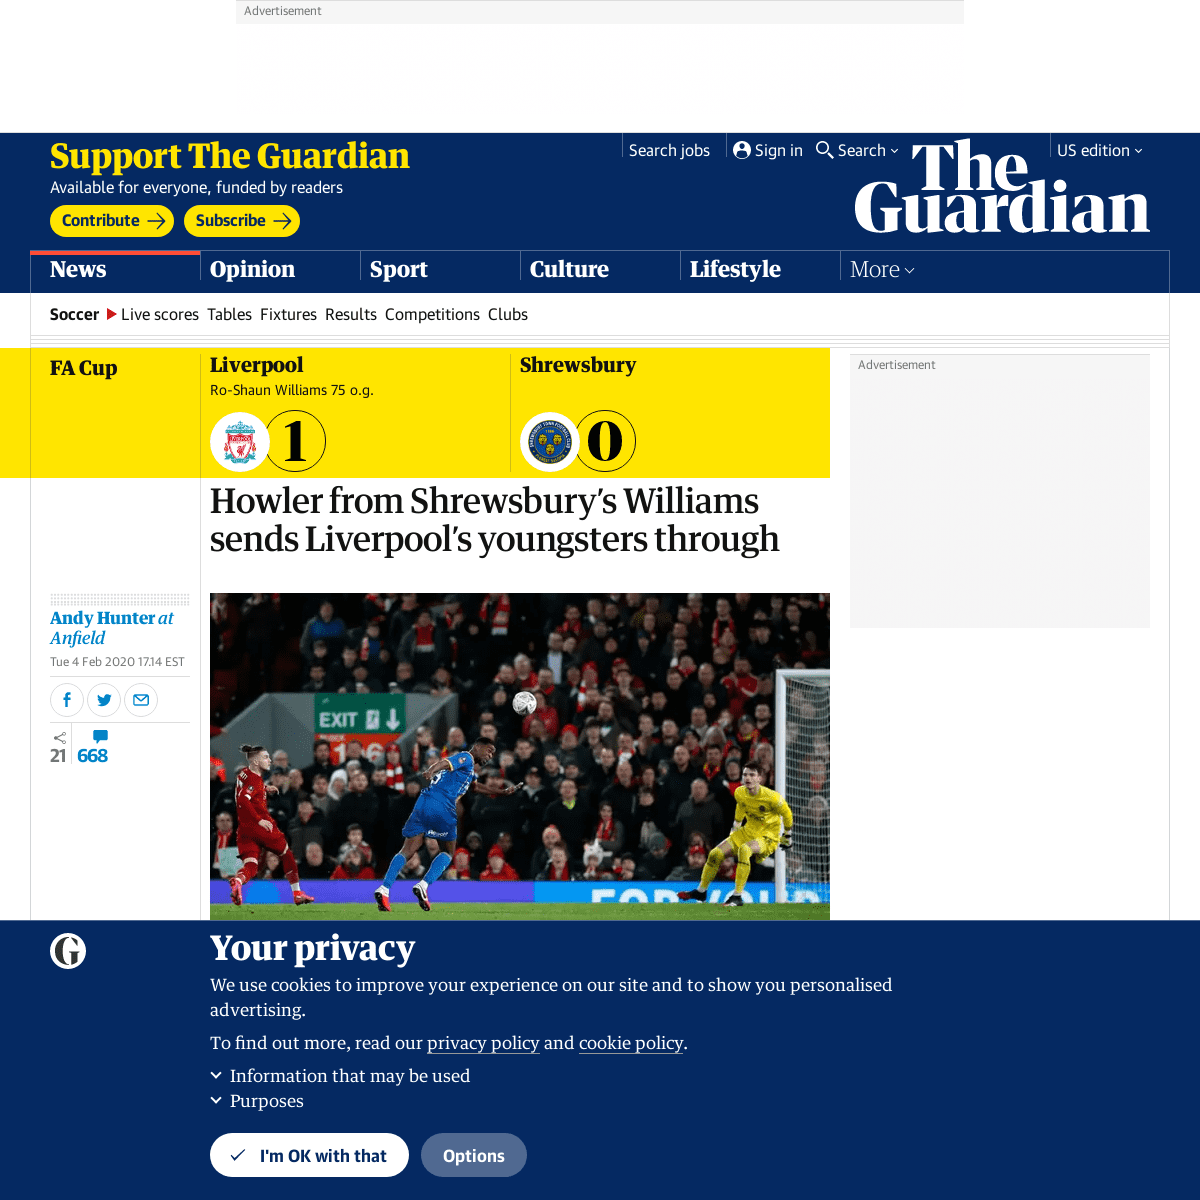 A complete backup of www.theguardian.com/football/2020/feb/04/liverpool-shrewsbury-fa-cup-match-report